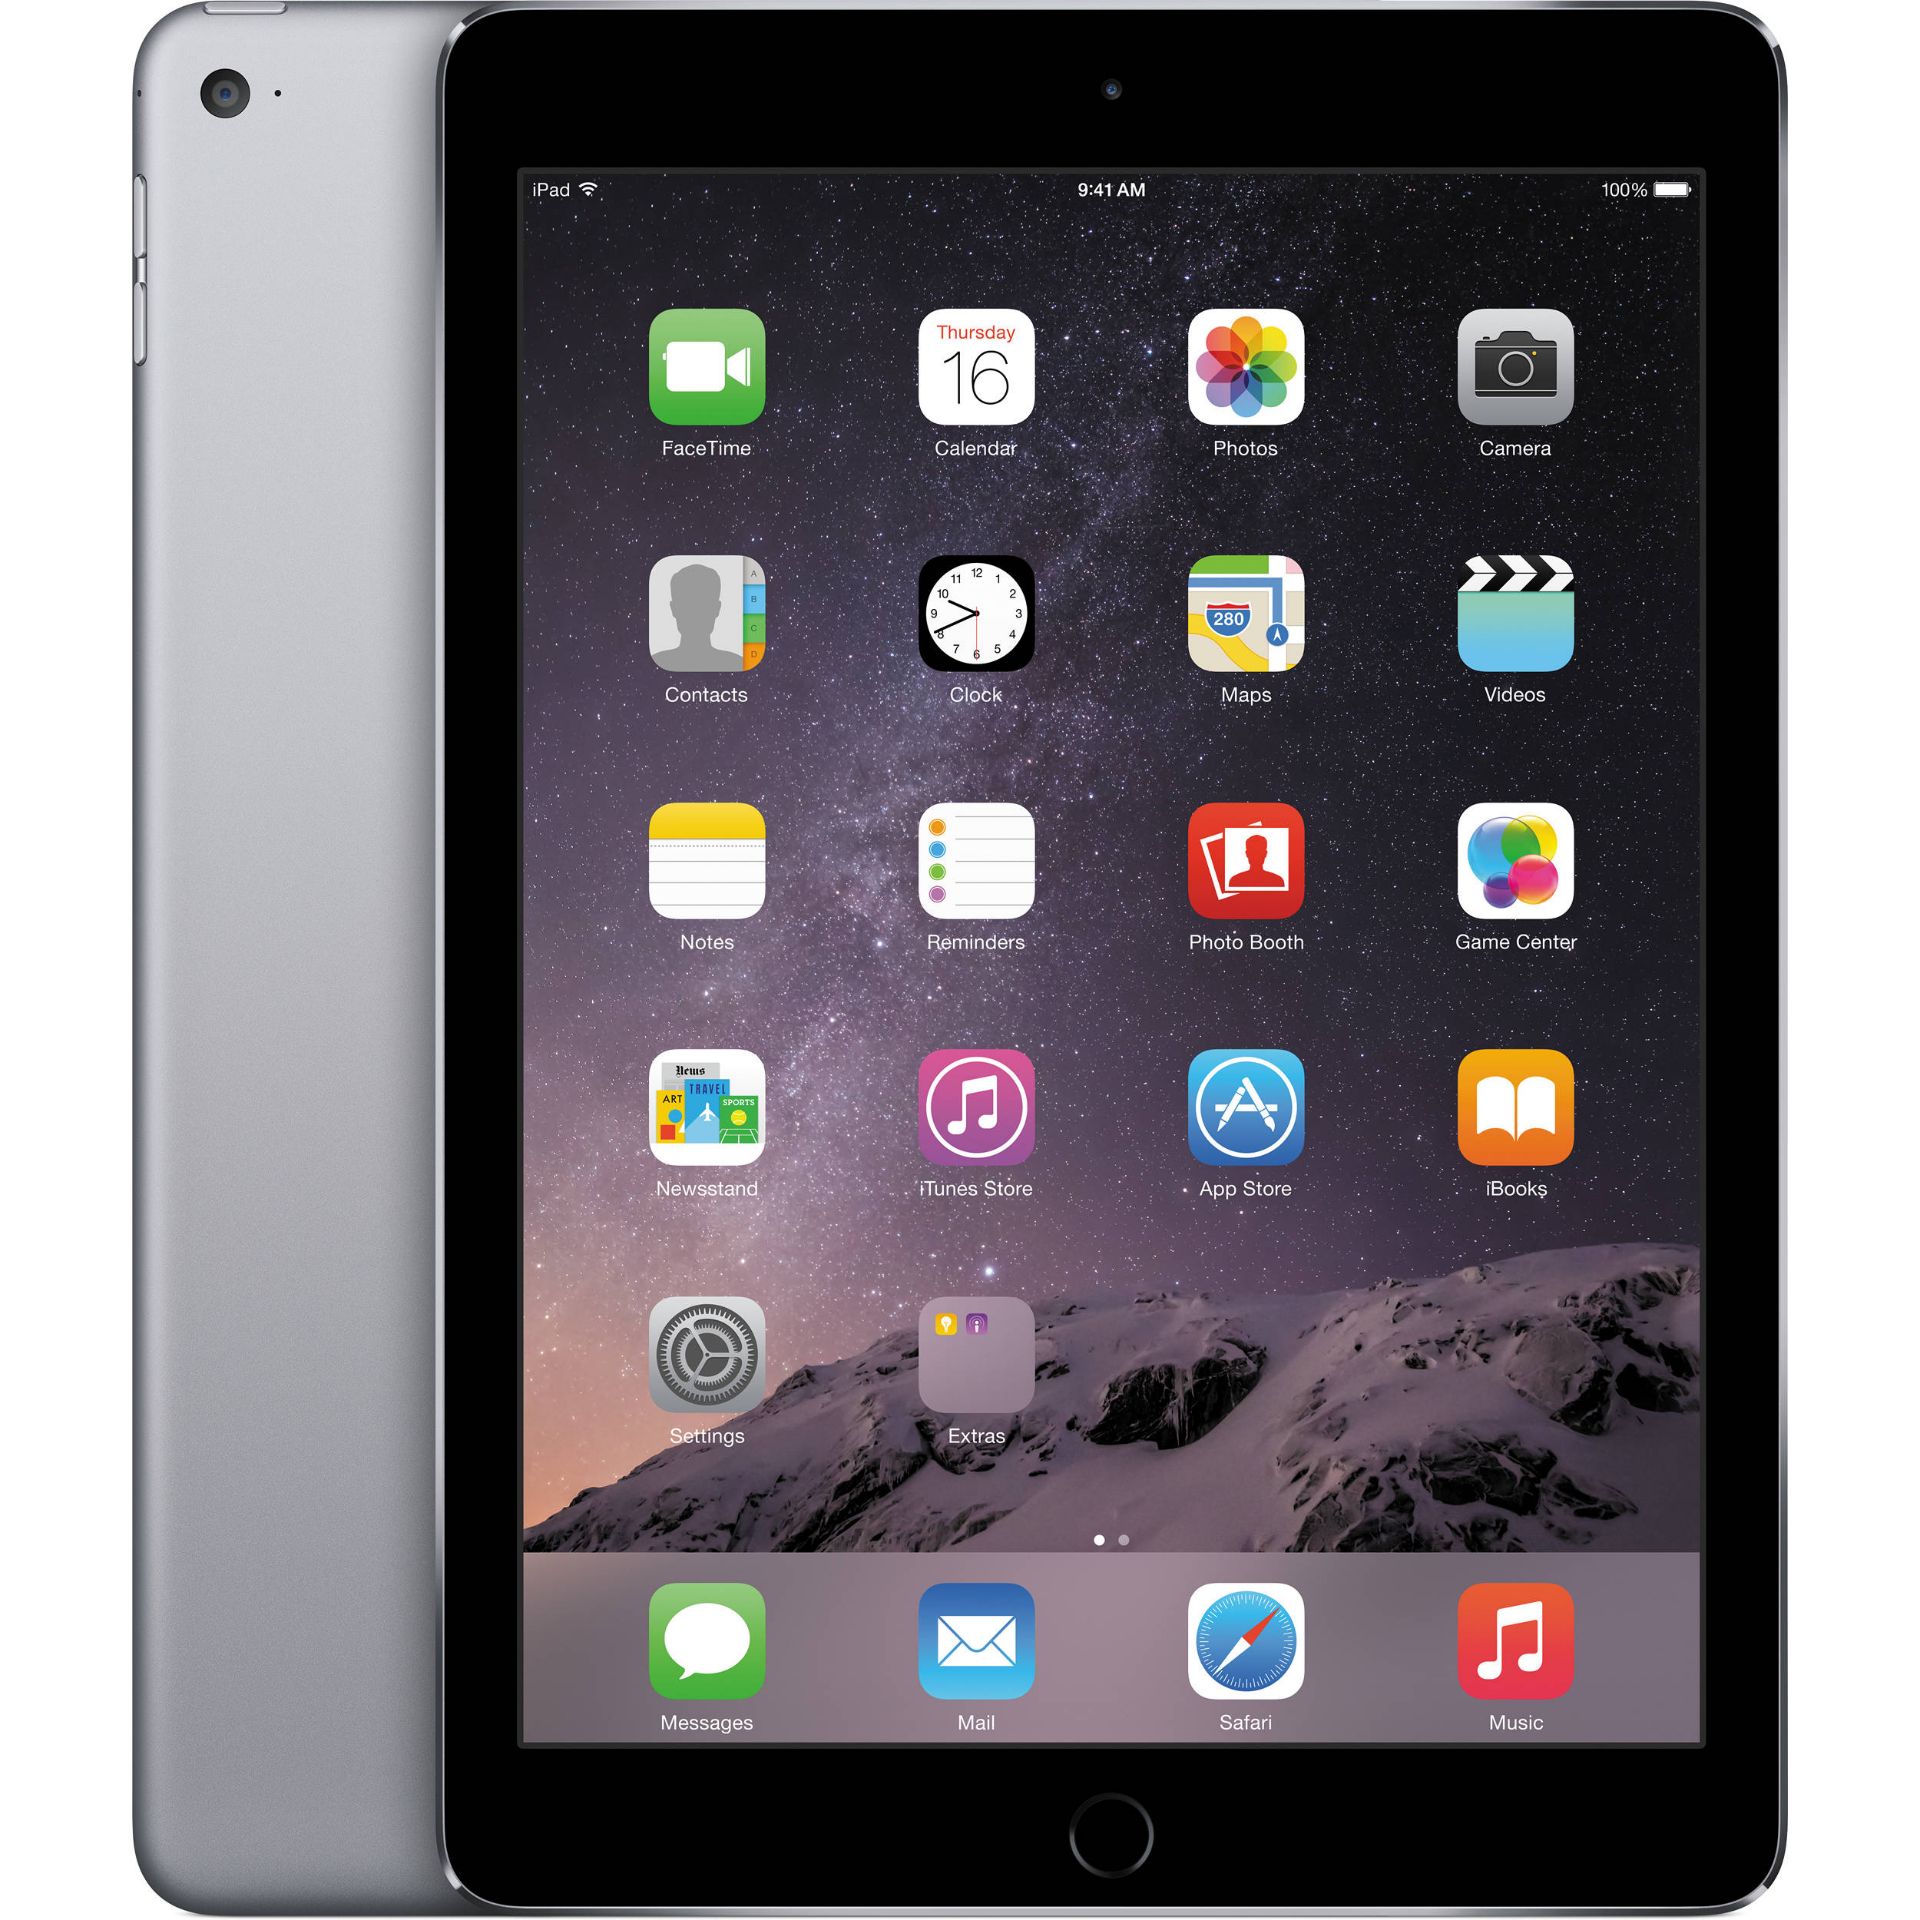 V Brand New Apple iPad Air 32GB Space Grey WiFi & 4G - Retina Display - Item Is Factory Sealed &